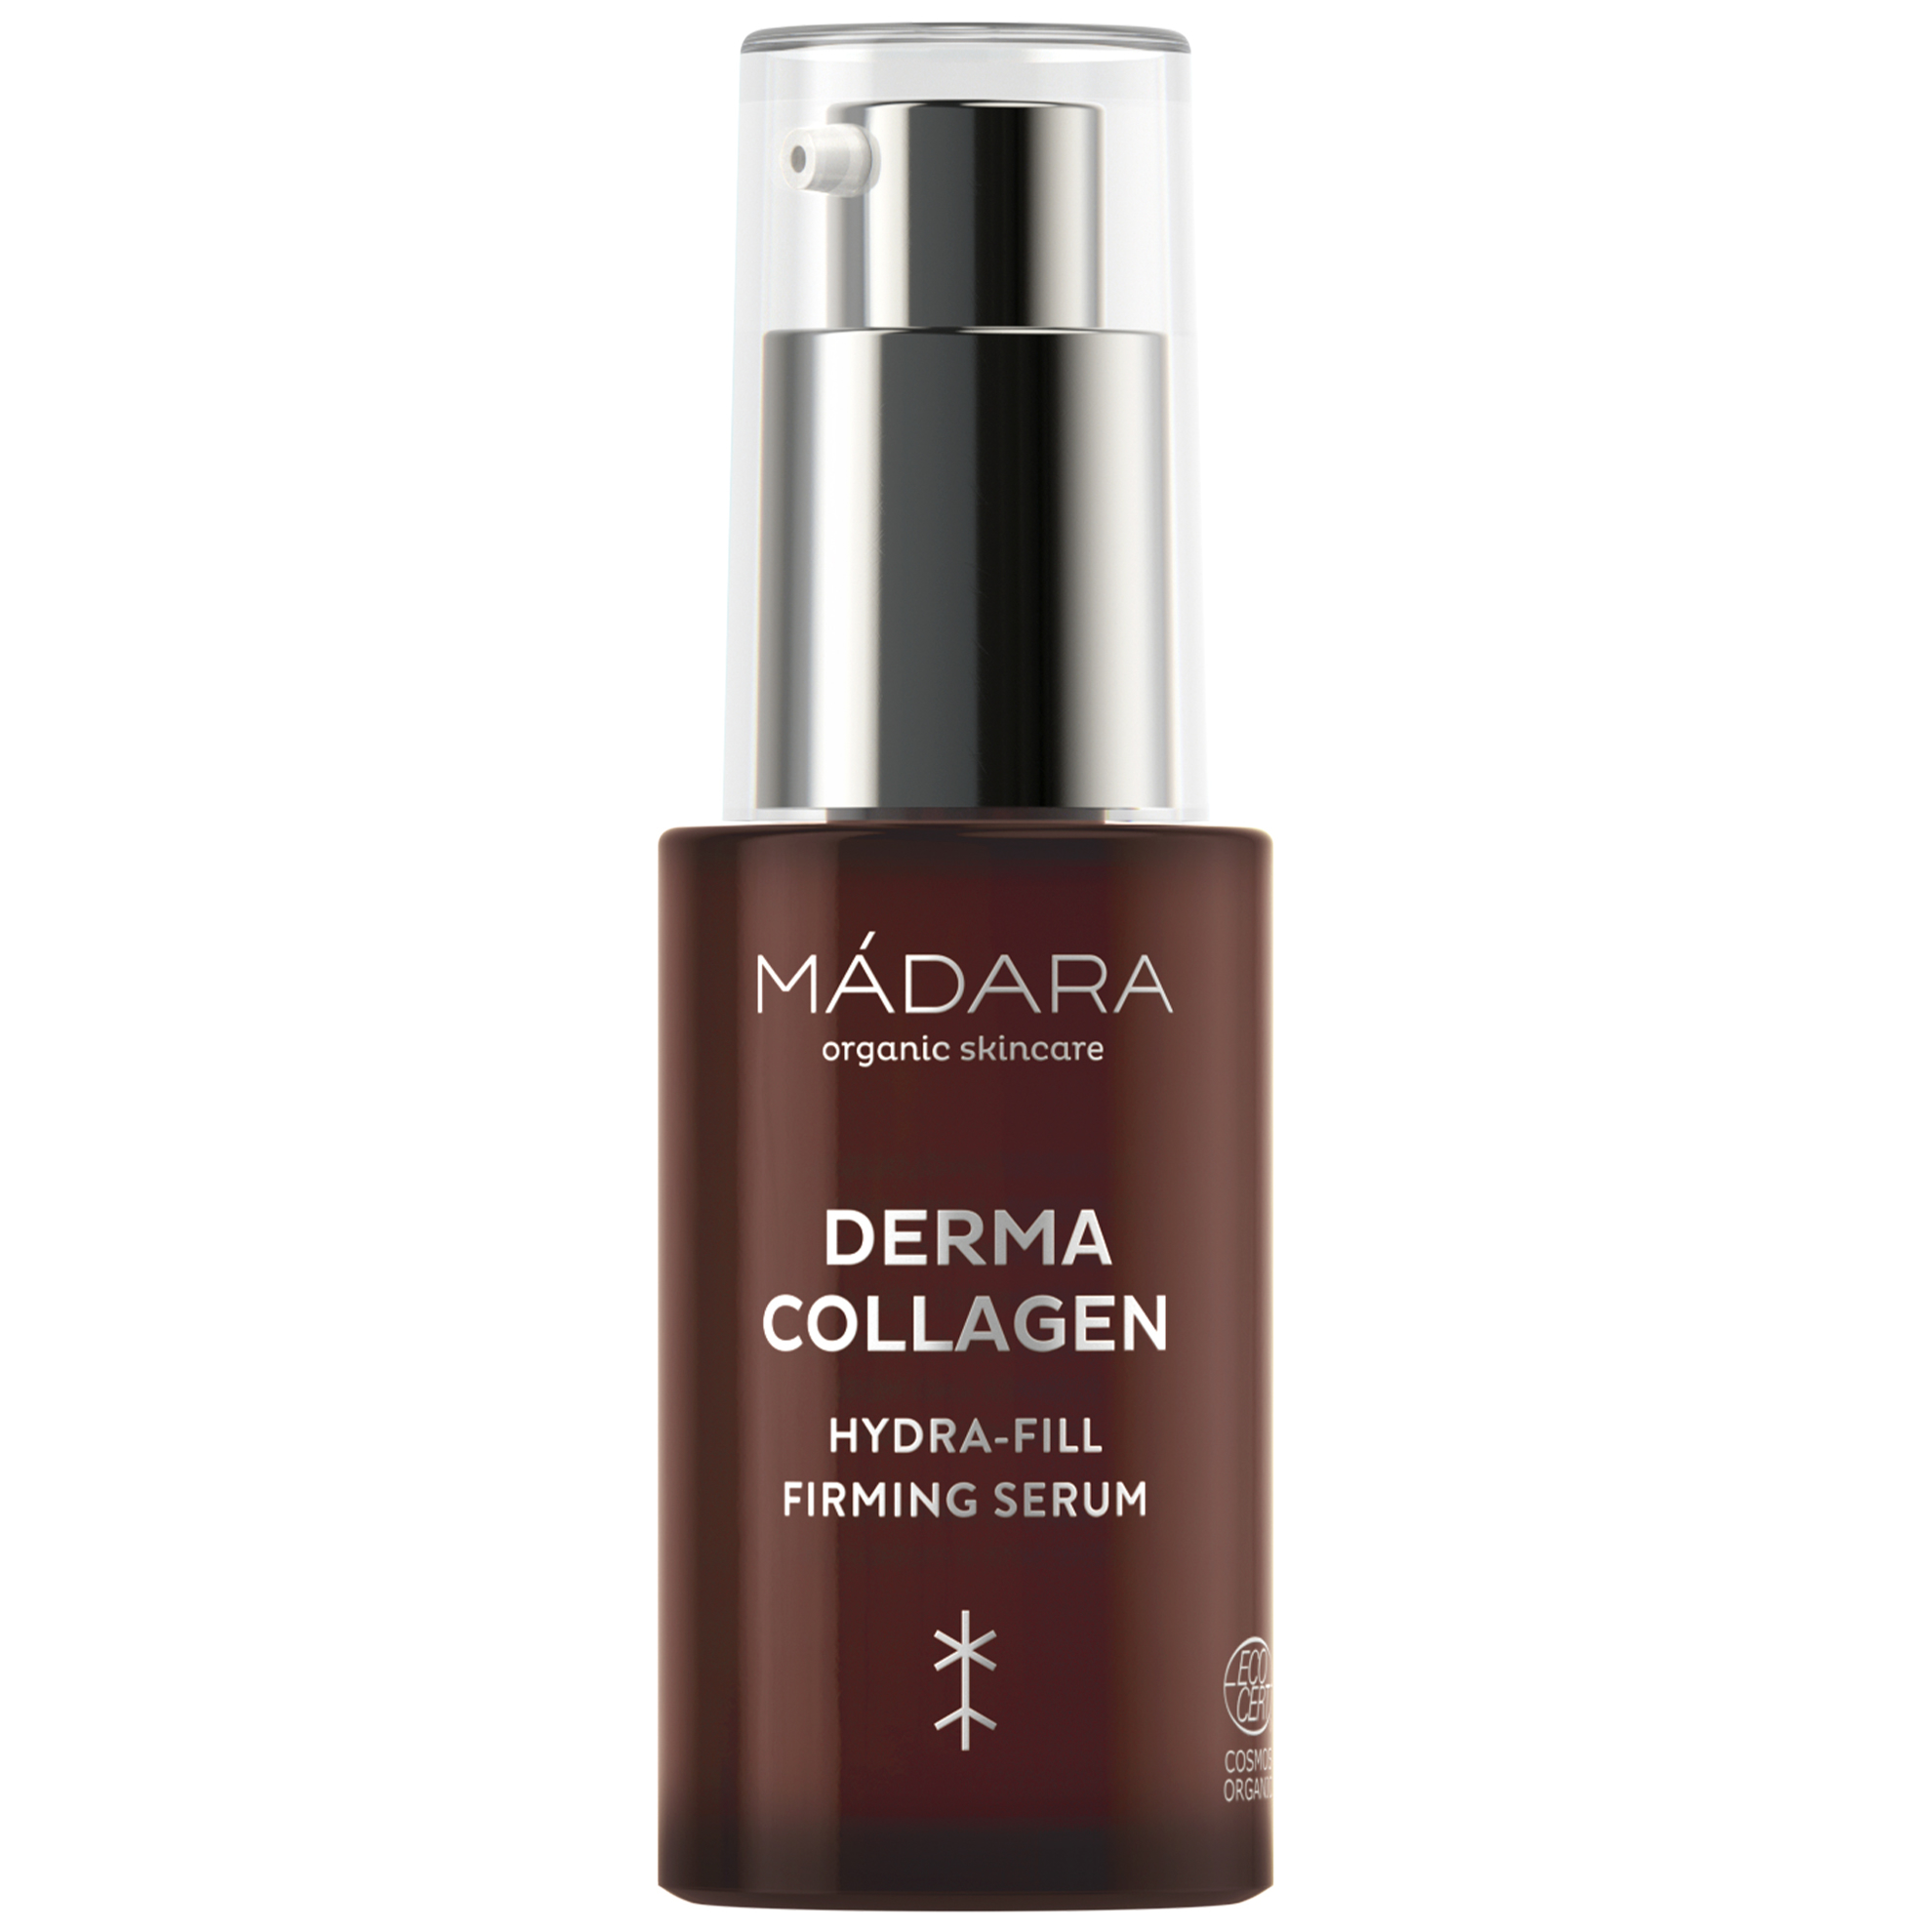 MADARA - Derma Collagen Hydra-Fill Firming Serum